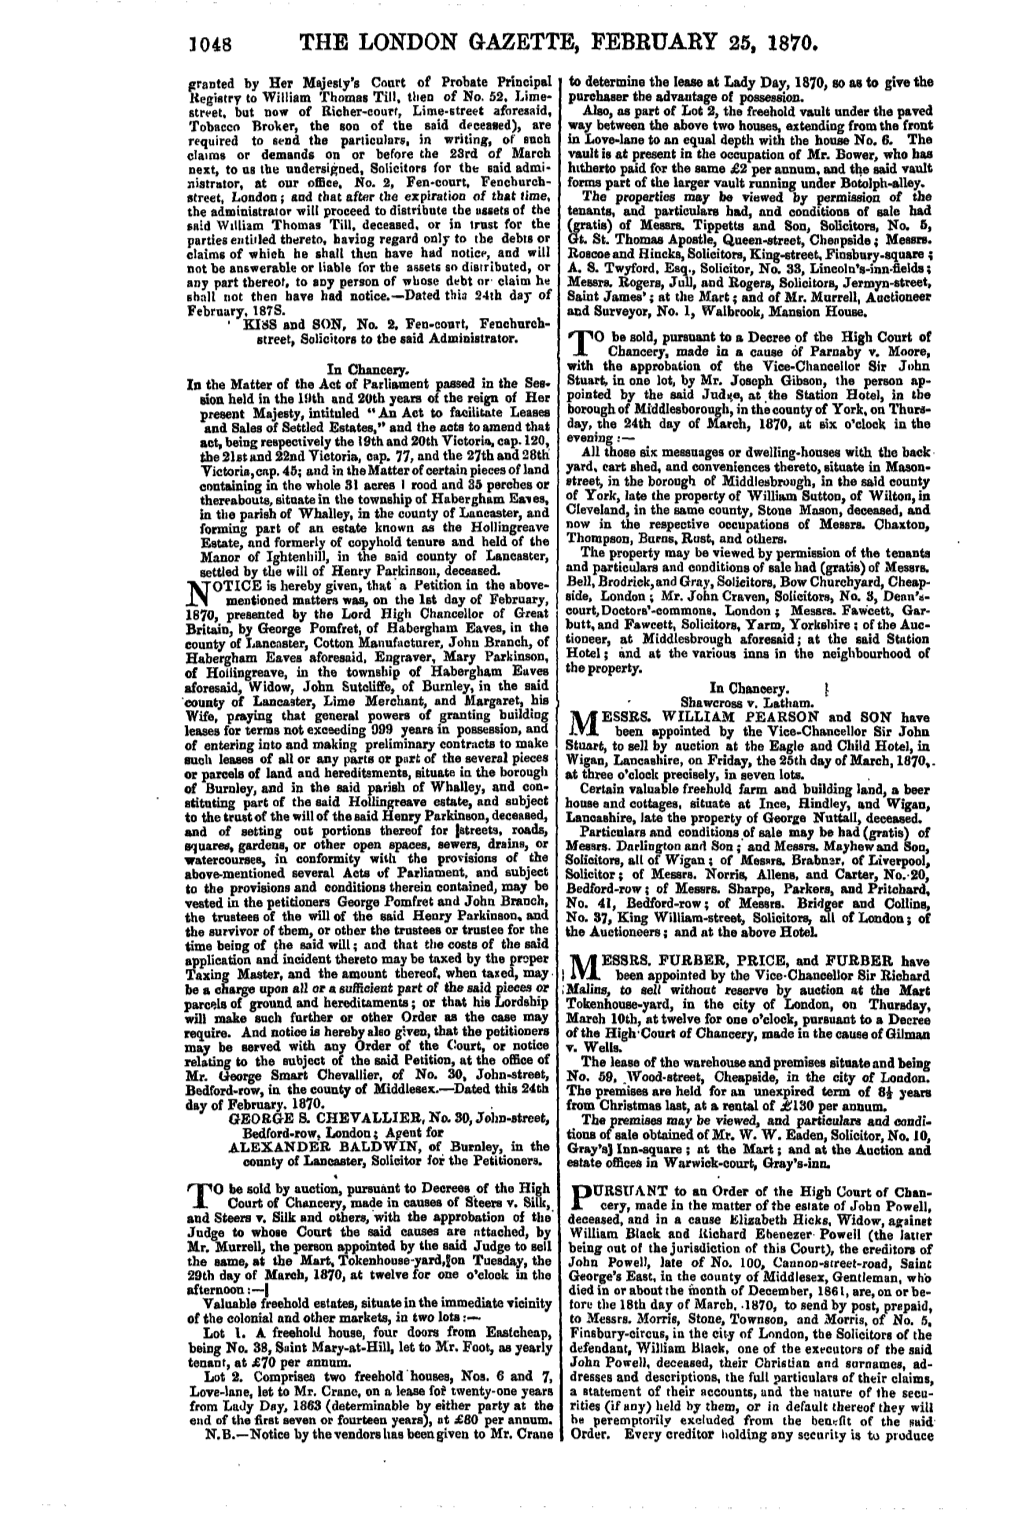 The London Gazette, February 25, 1870